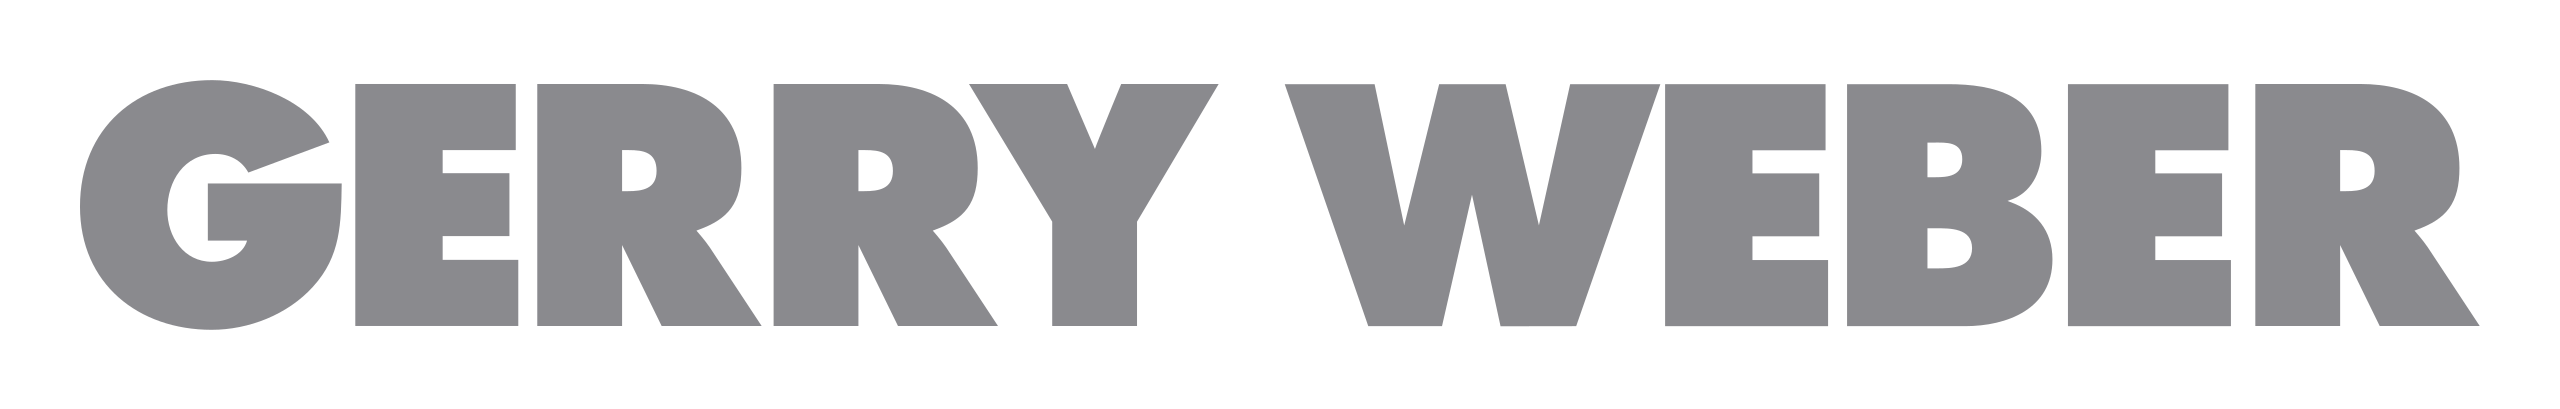 Weber Logo.svg - Wikimedia Commons